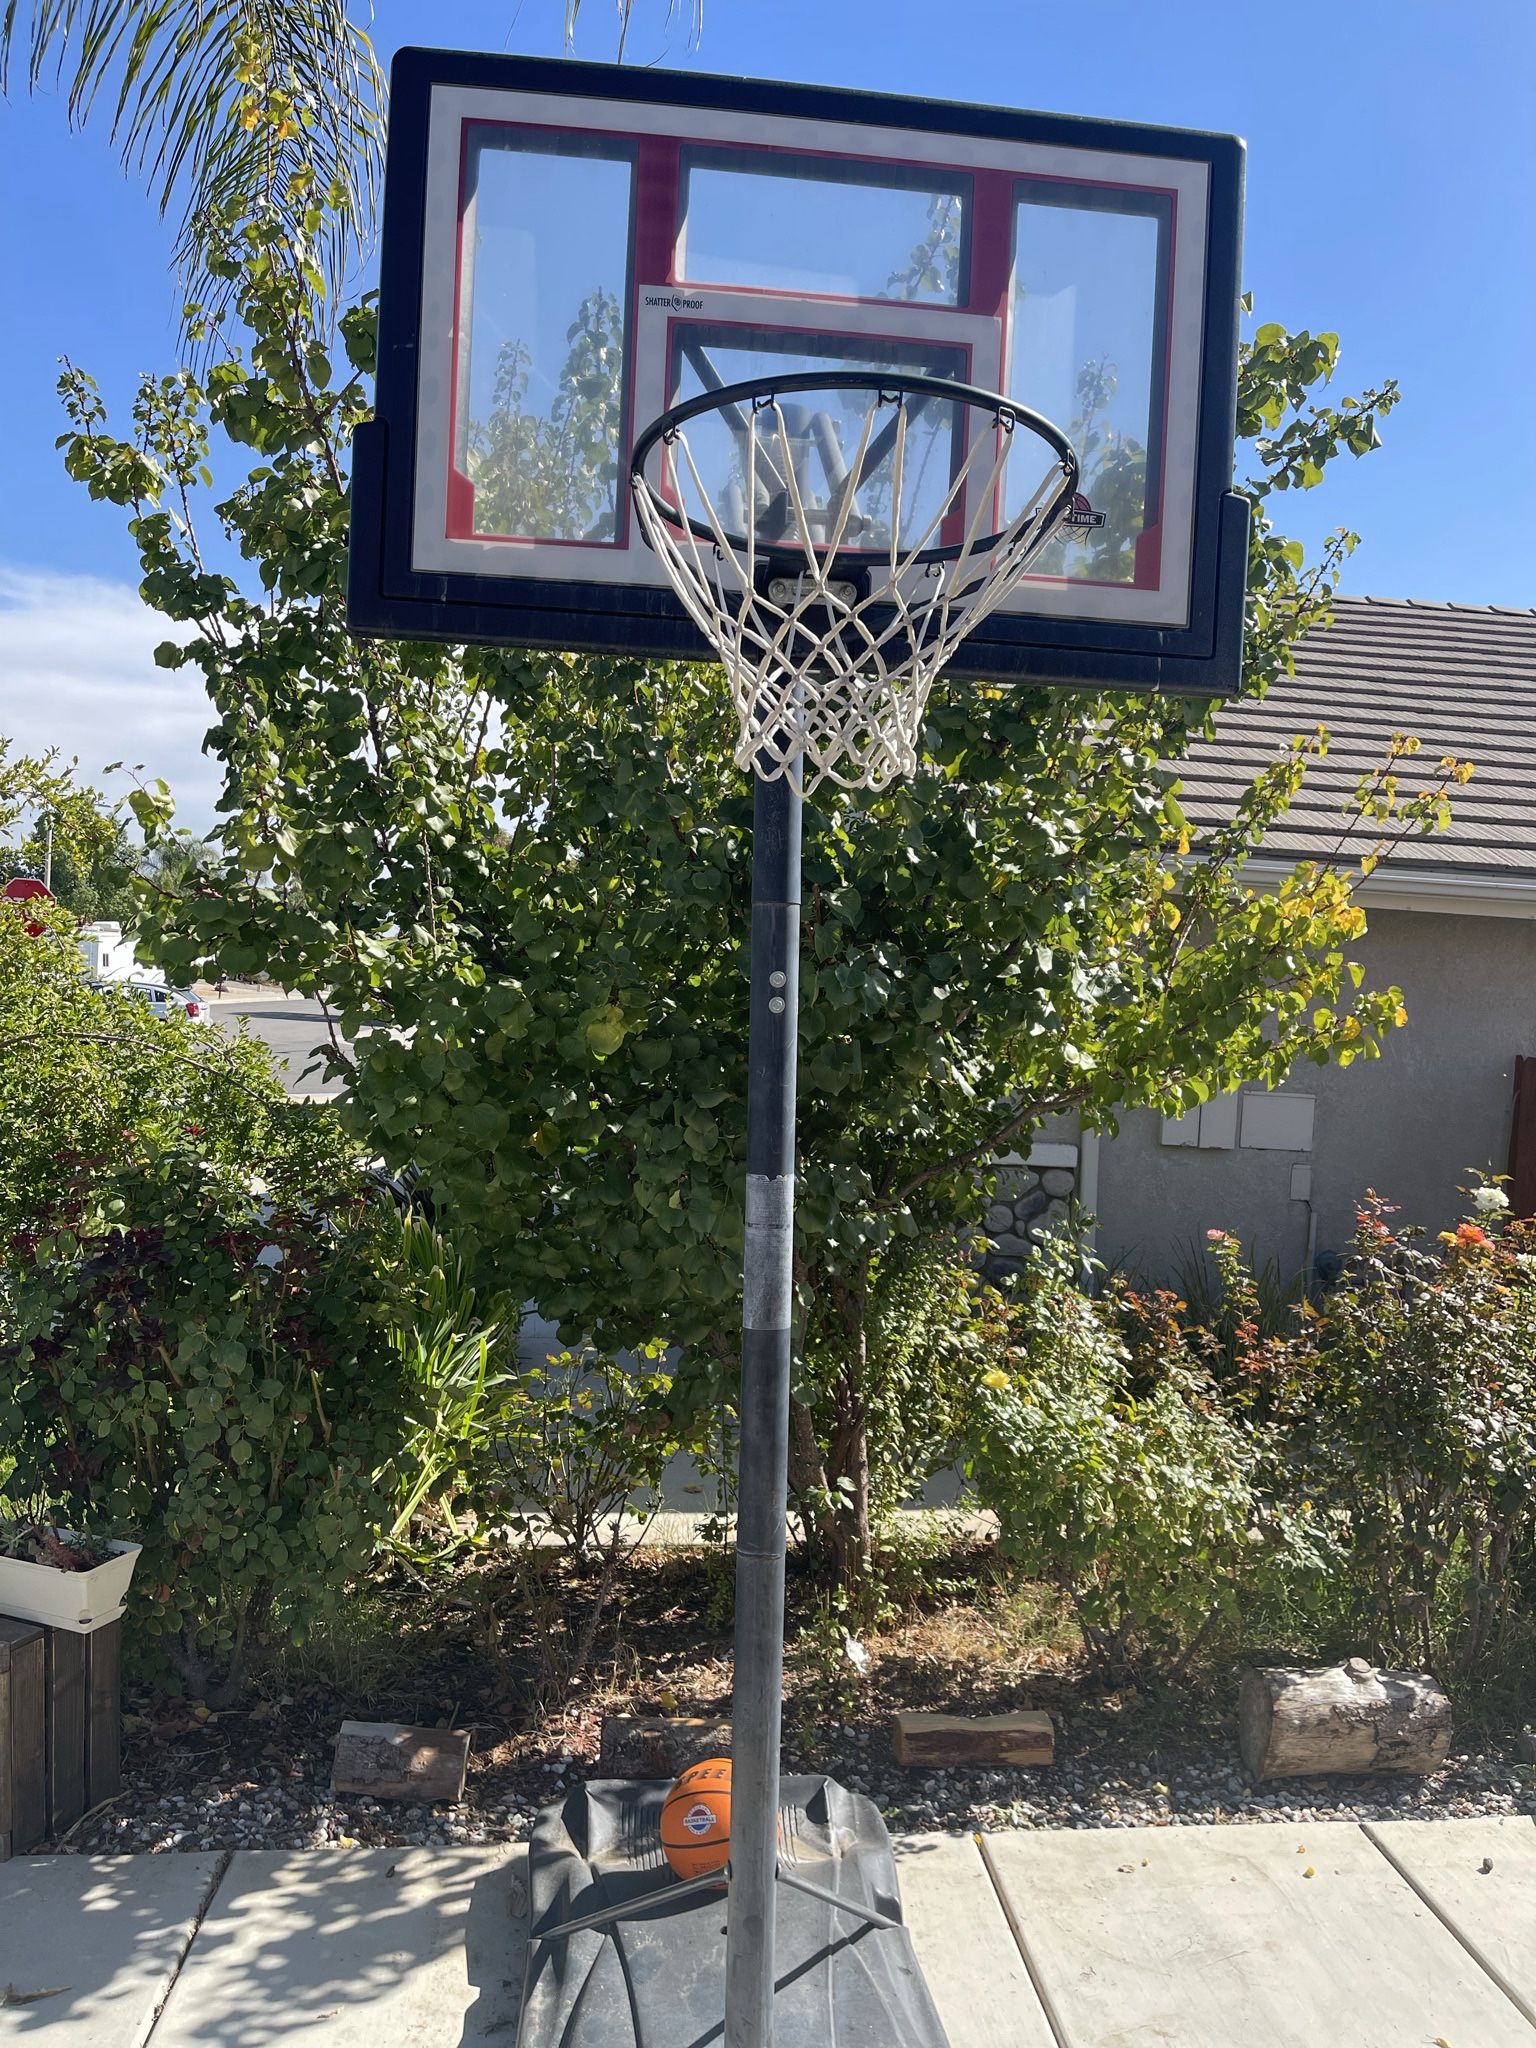 PENDING PICK UP Adjustable Basketball Hoop And New Ball